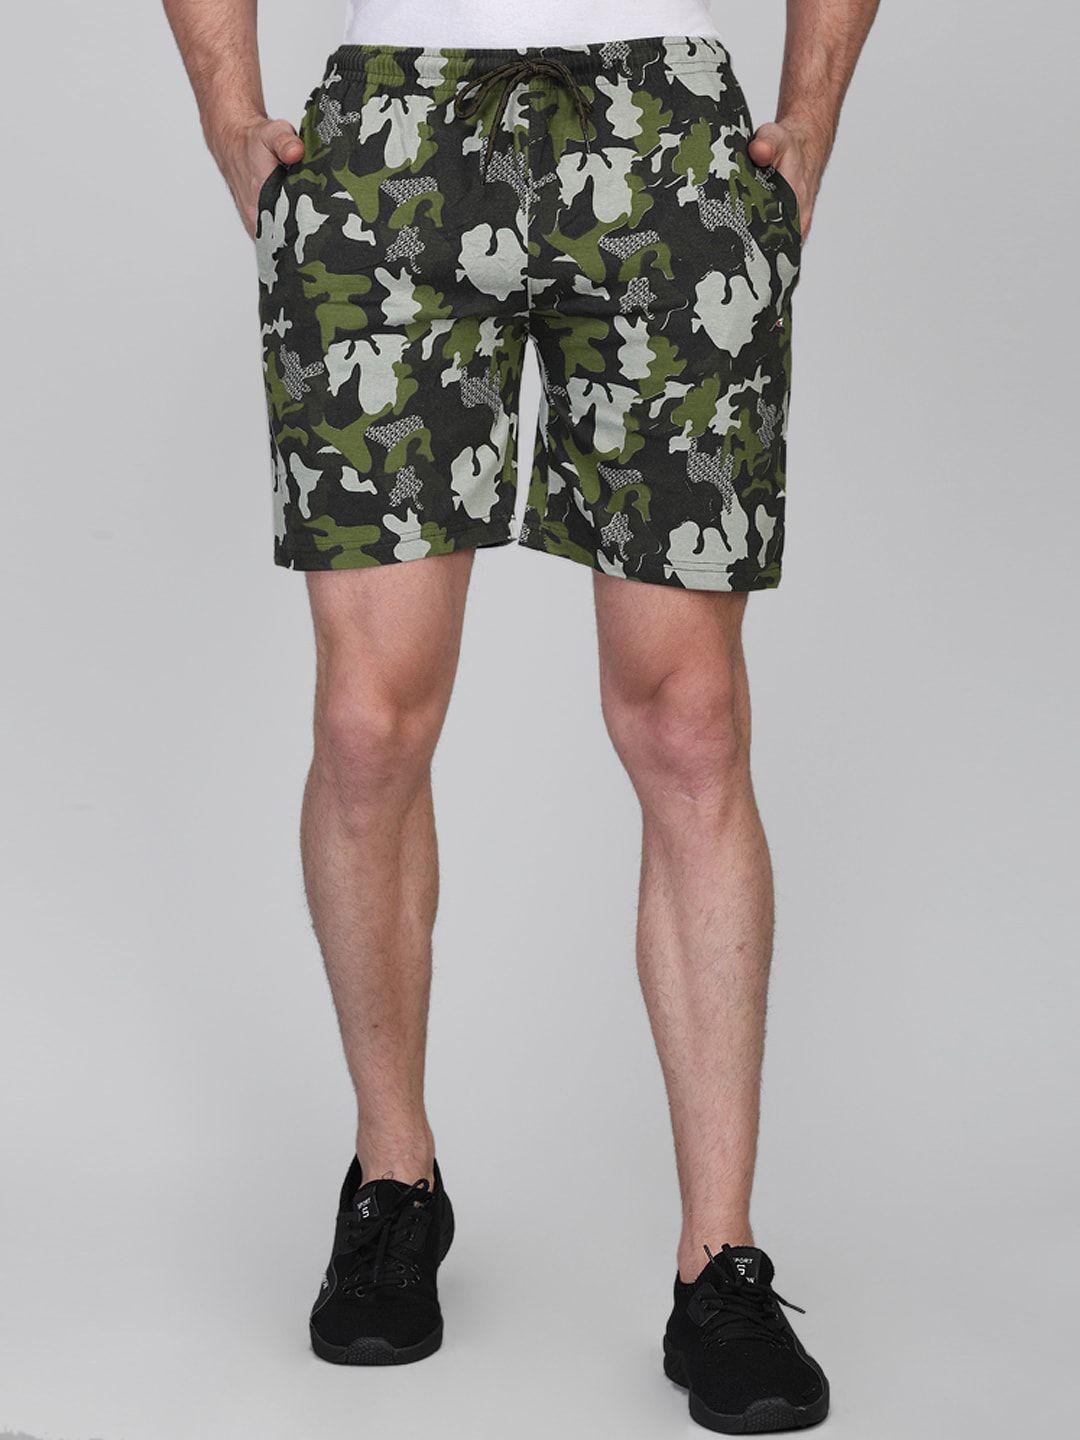 neva men olive green camouflage printed shorts